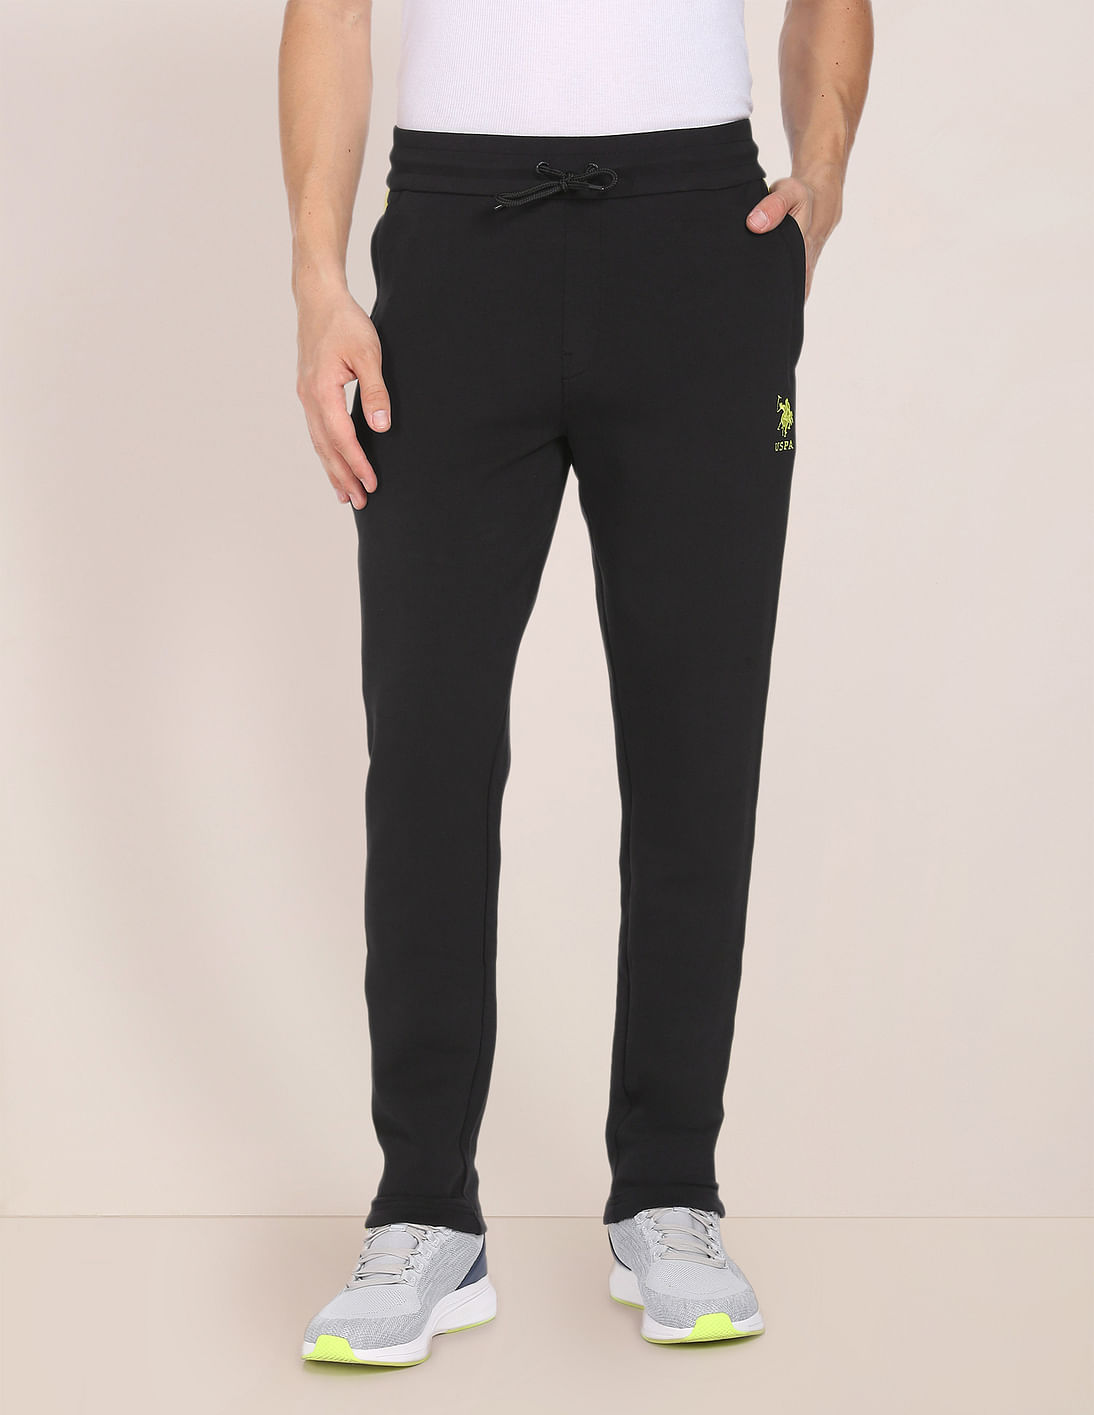 U.S. POLO ASSN. Loungewear : Buy U.S. POLO ASSN. Solid LR001 Lounge Track  Pants Black Online